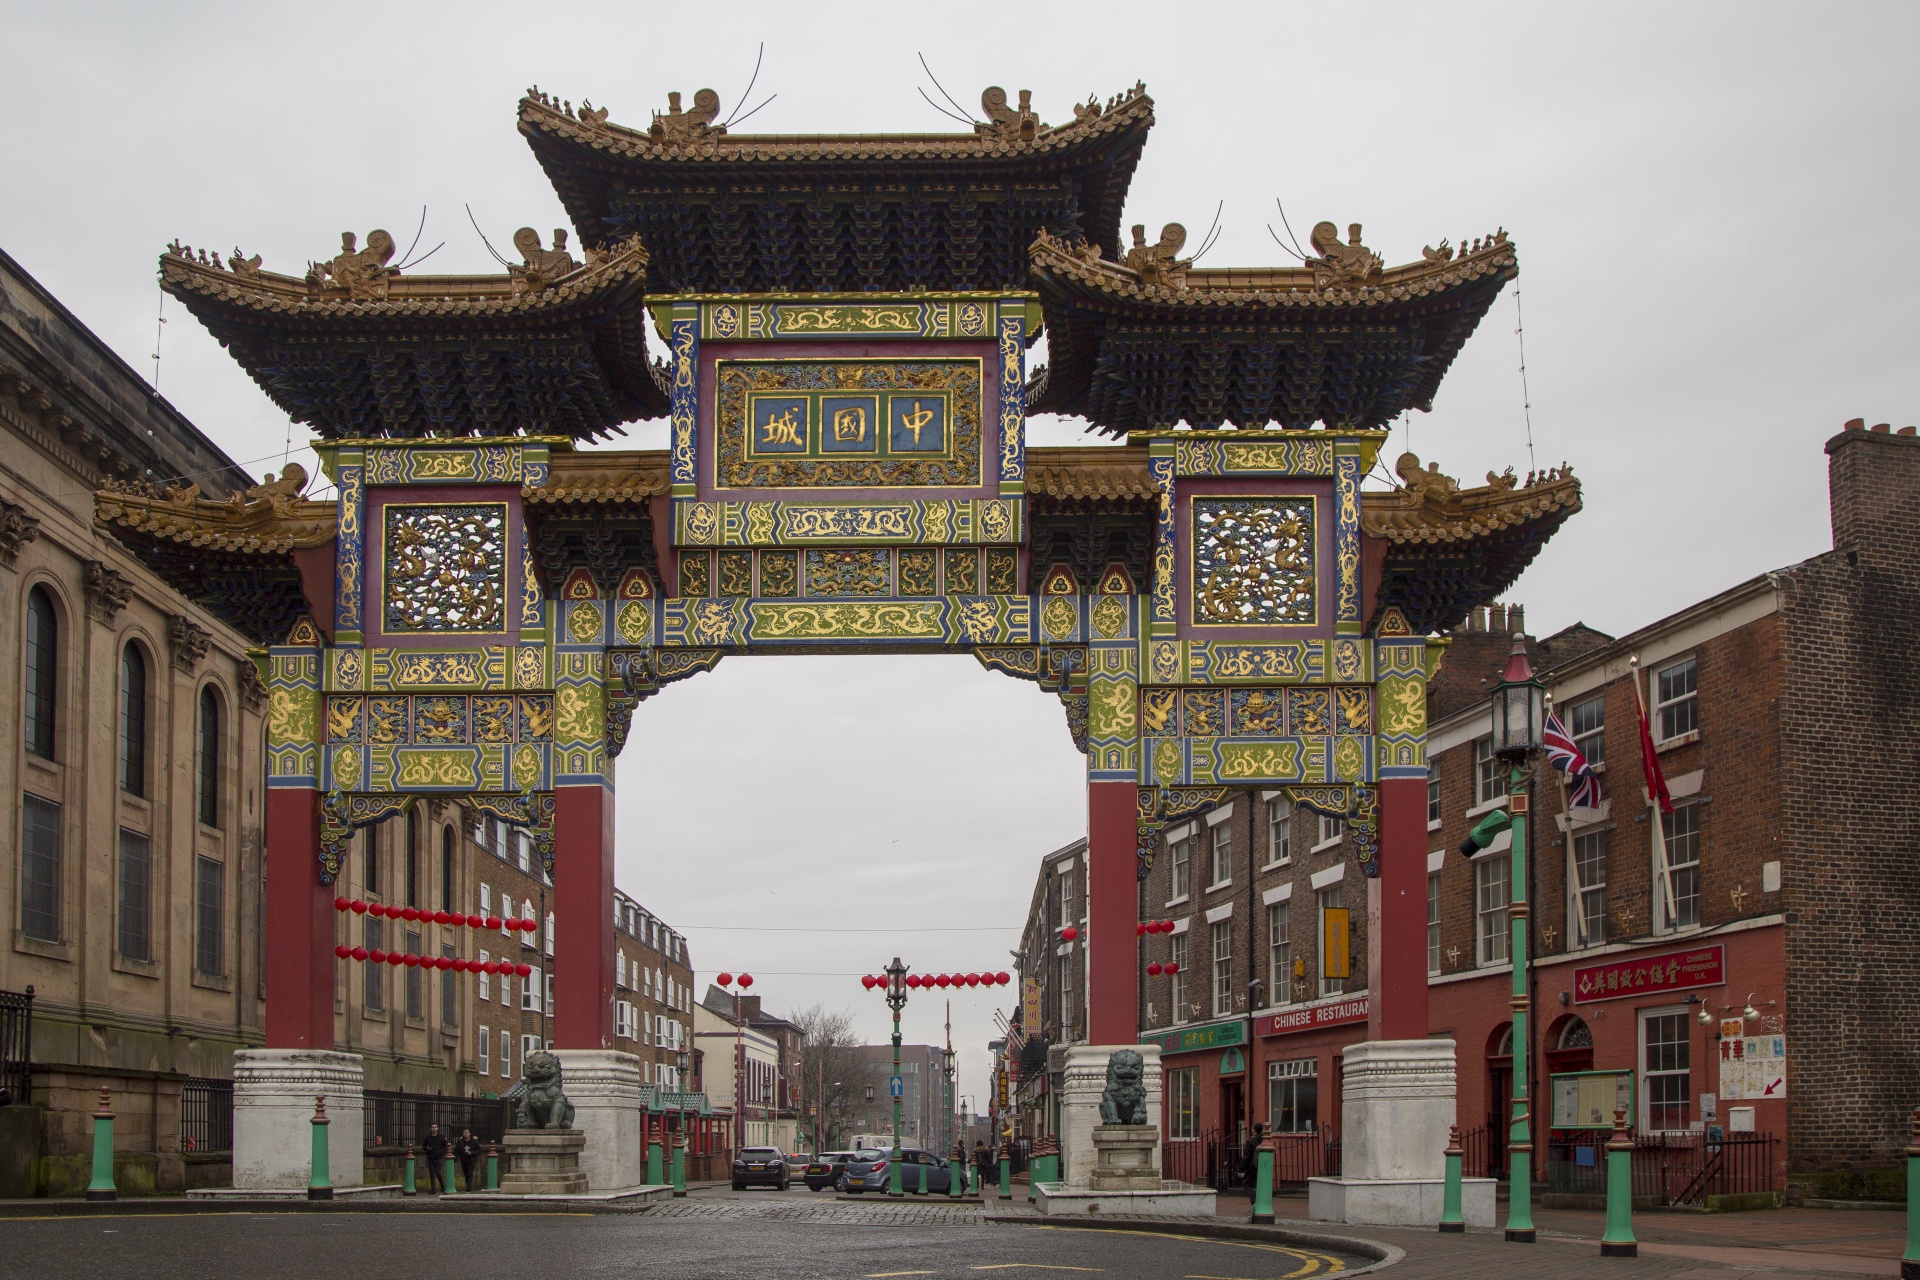 Kina Town, Liverpool